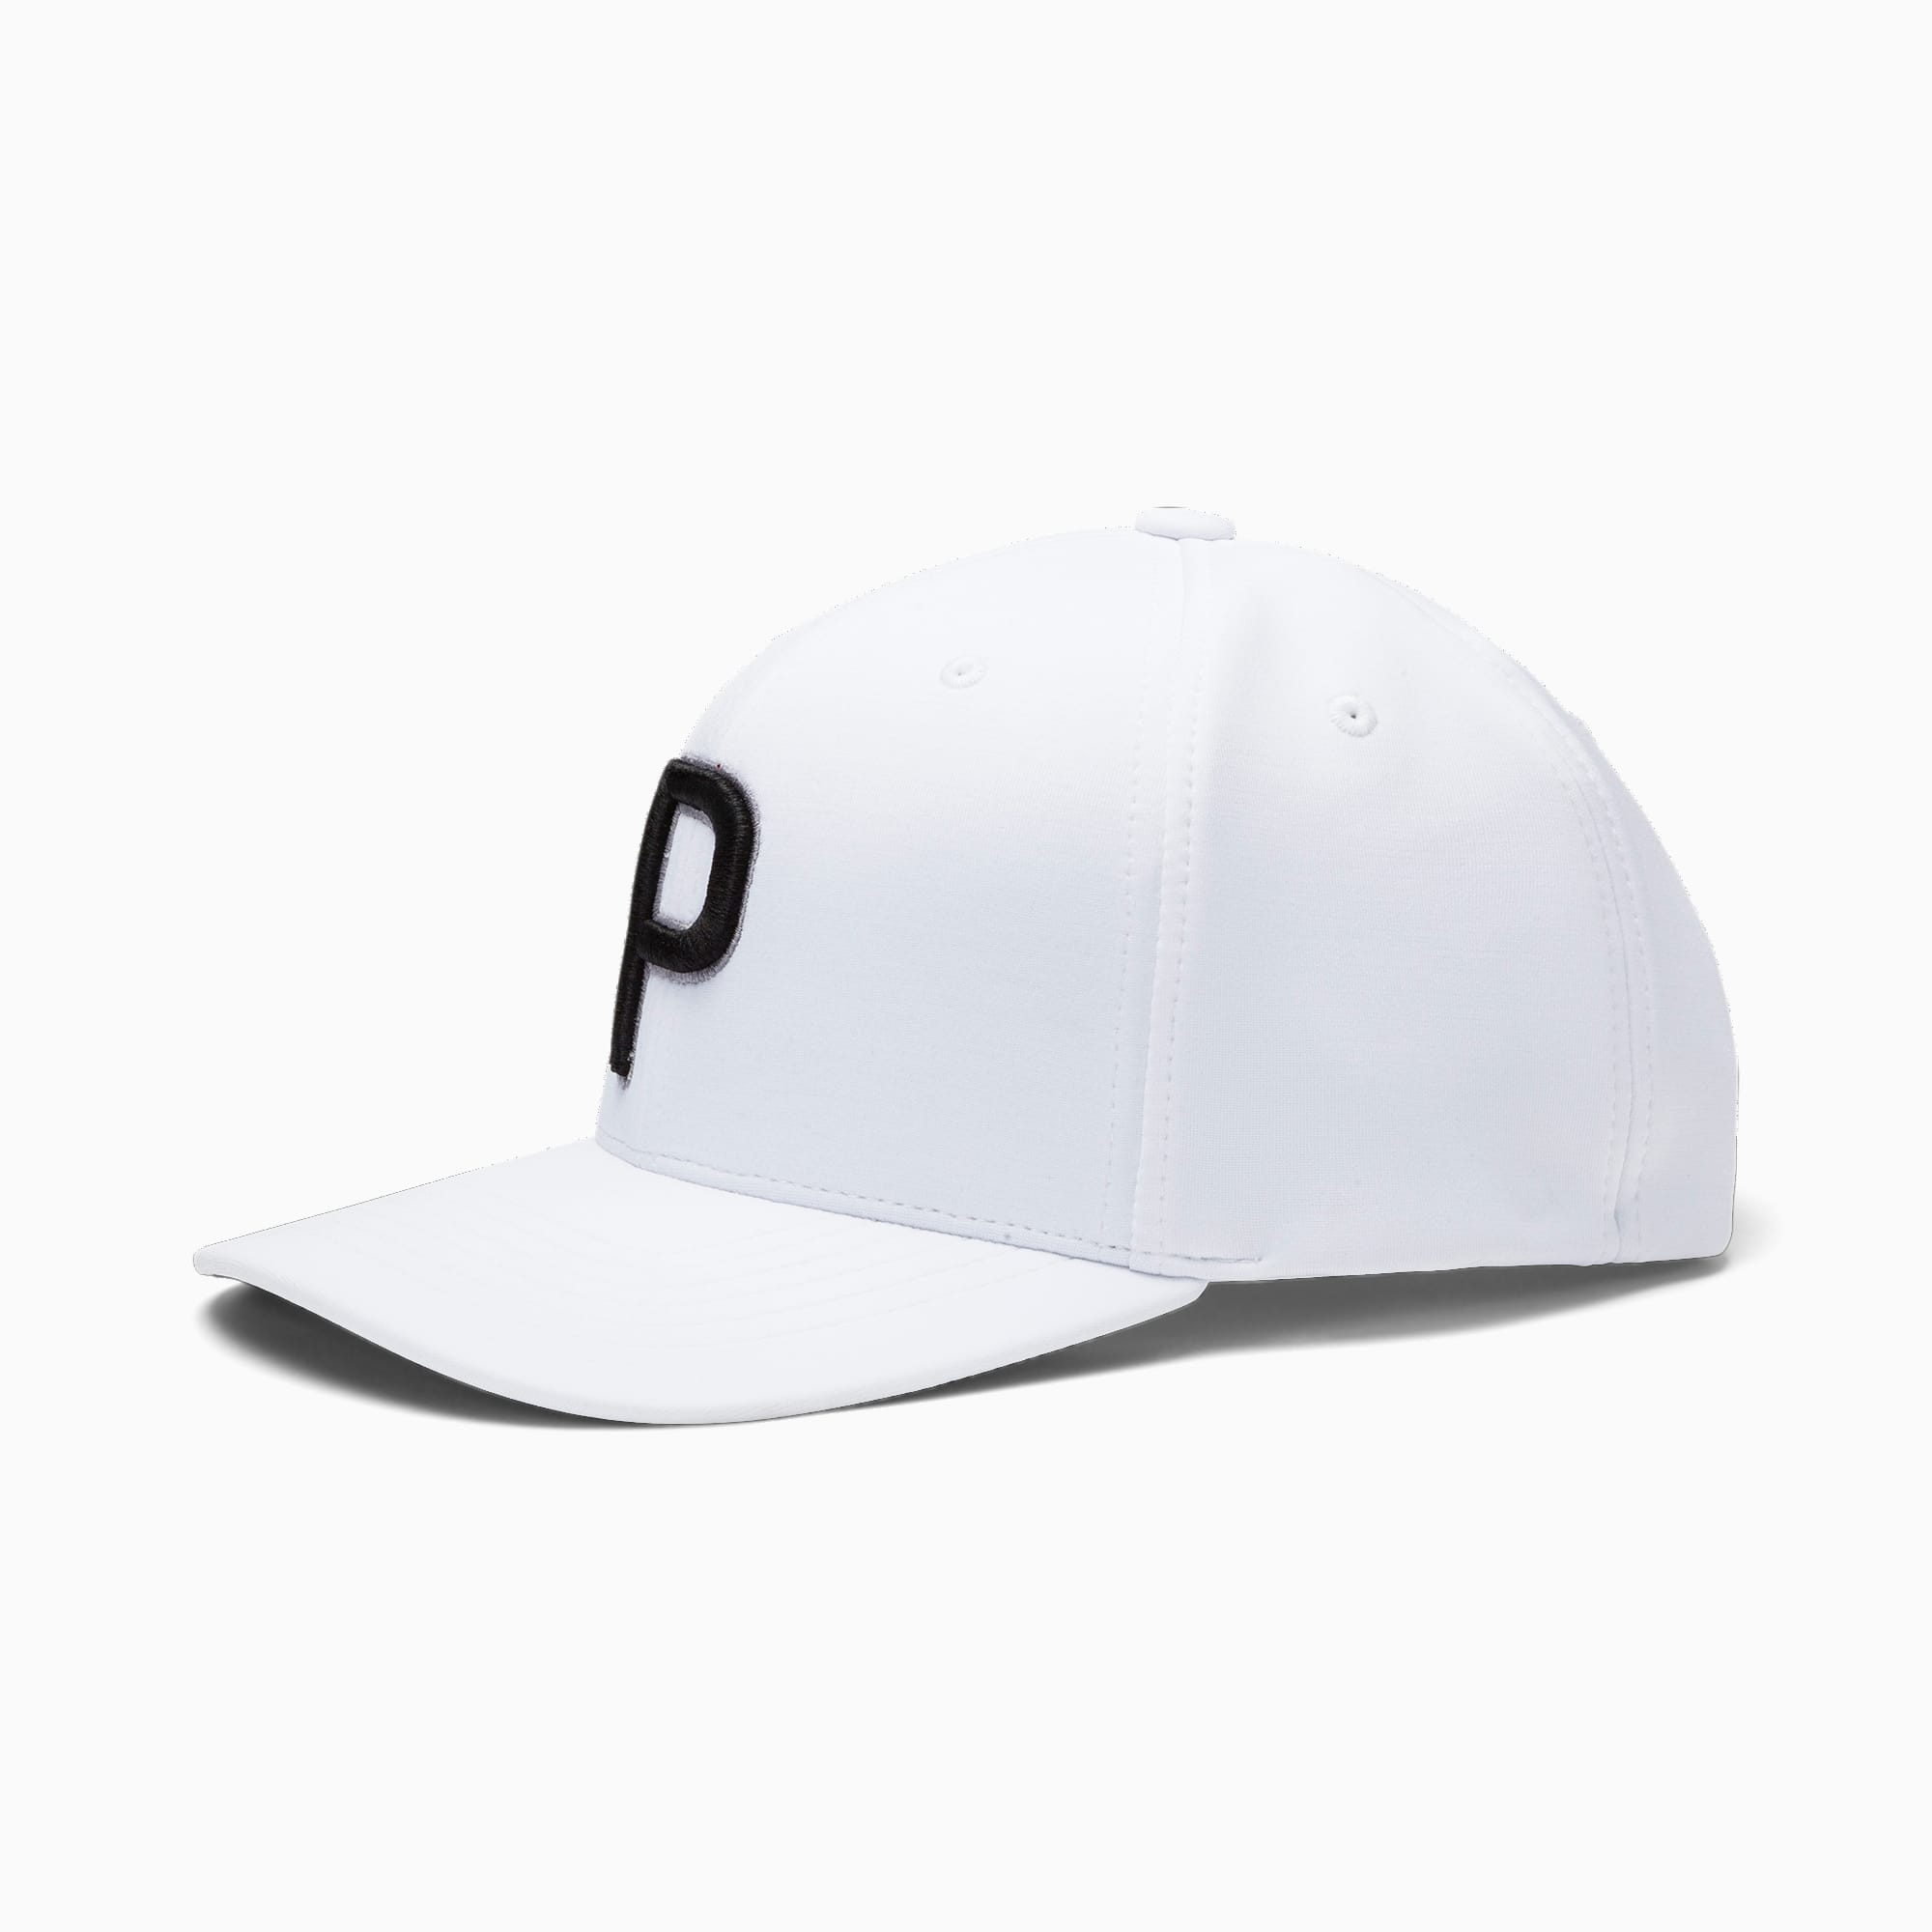 P Snapback Men's Golf Cap | Bright White | PUMA Caps | PUMA